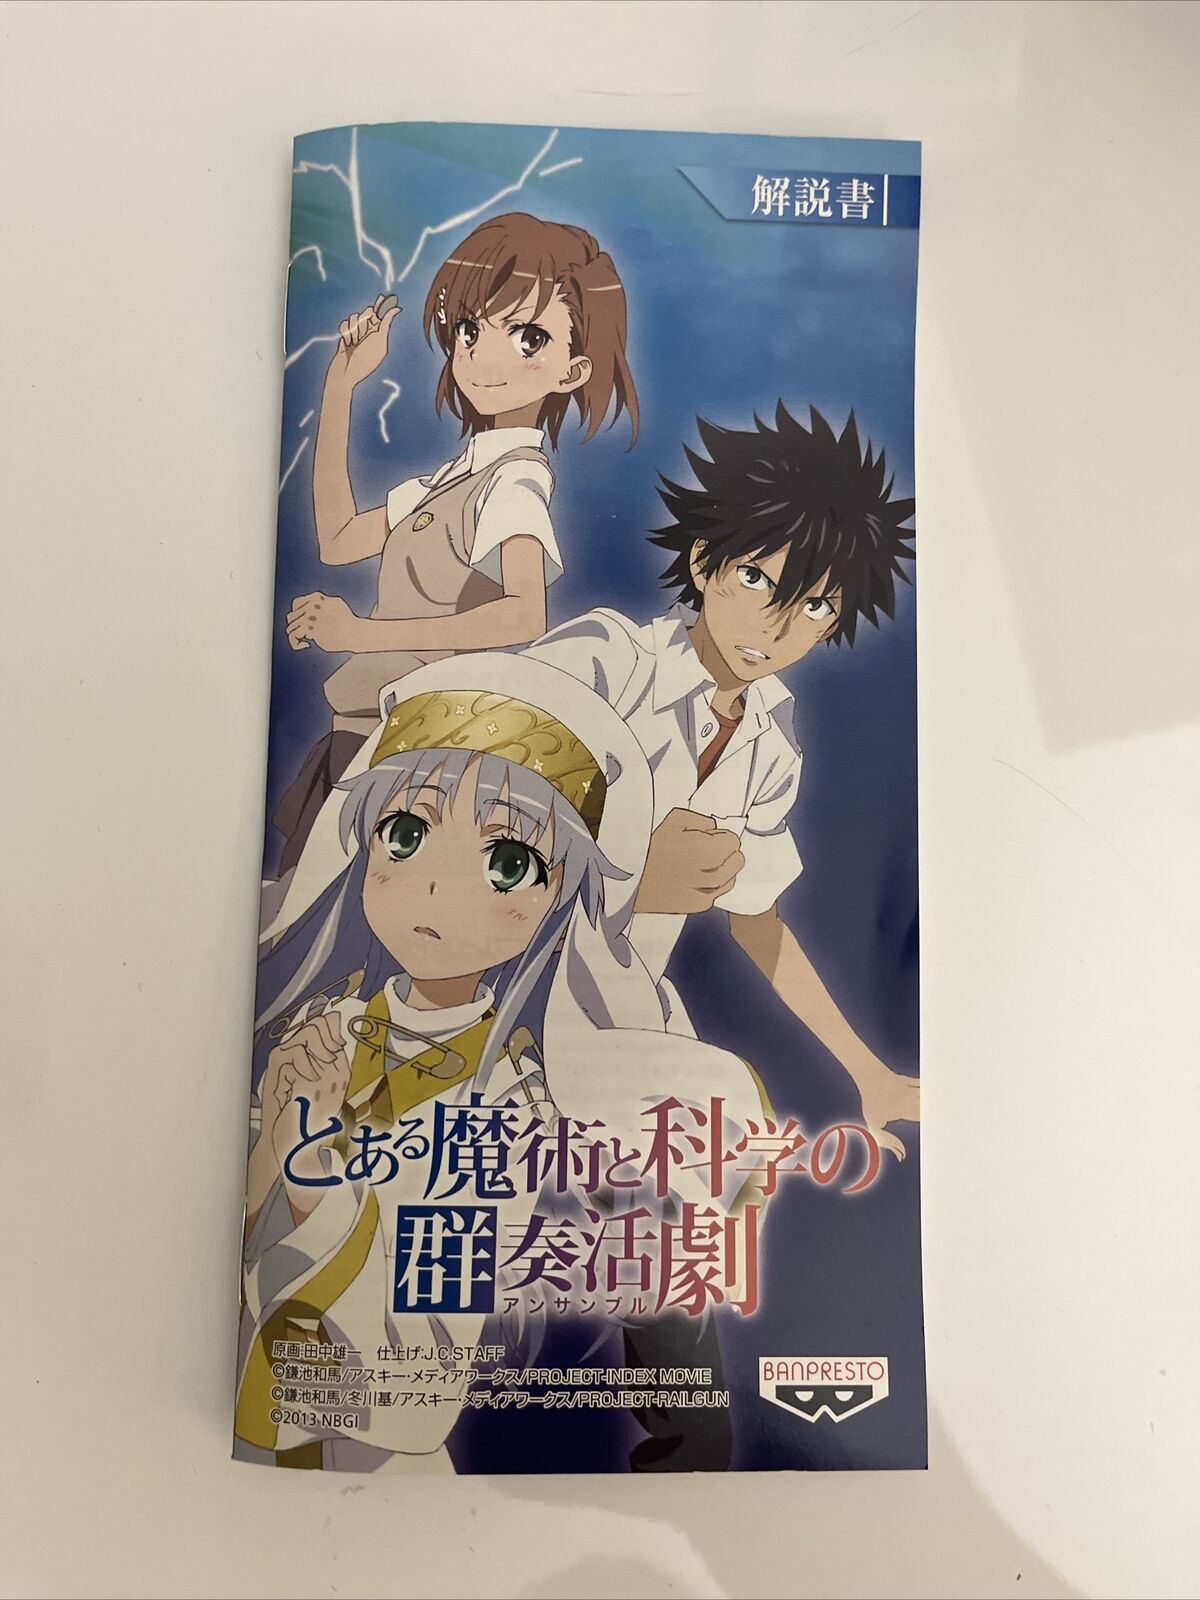 Toaru Majutsu to Kagaku no Ensemble - Sony PlayStation PSP JAPAN Game Complete